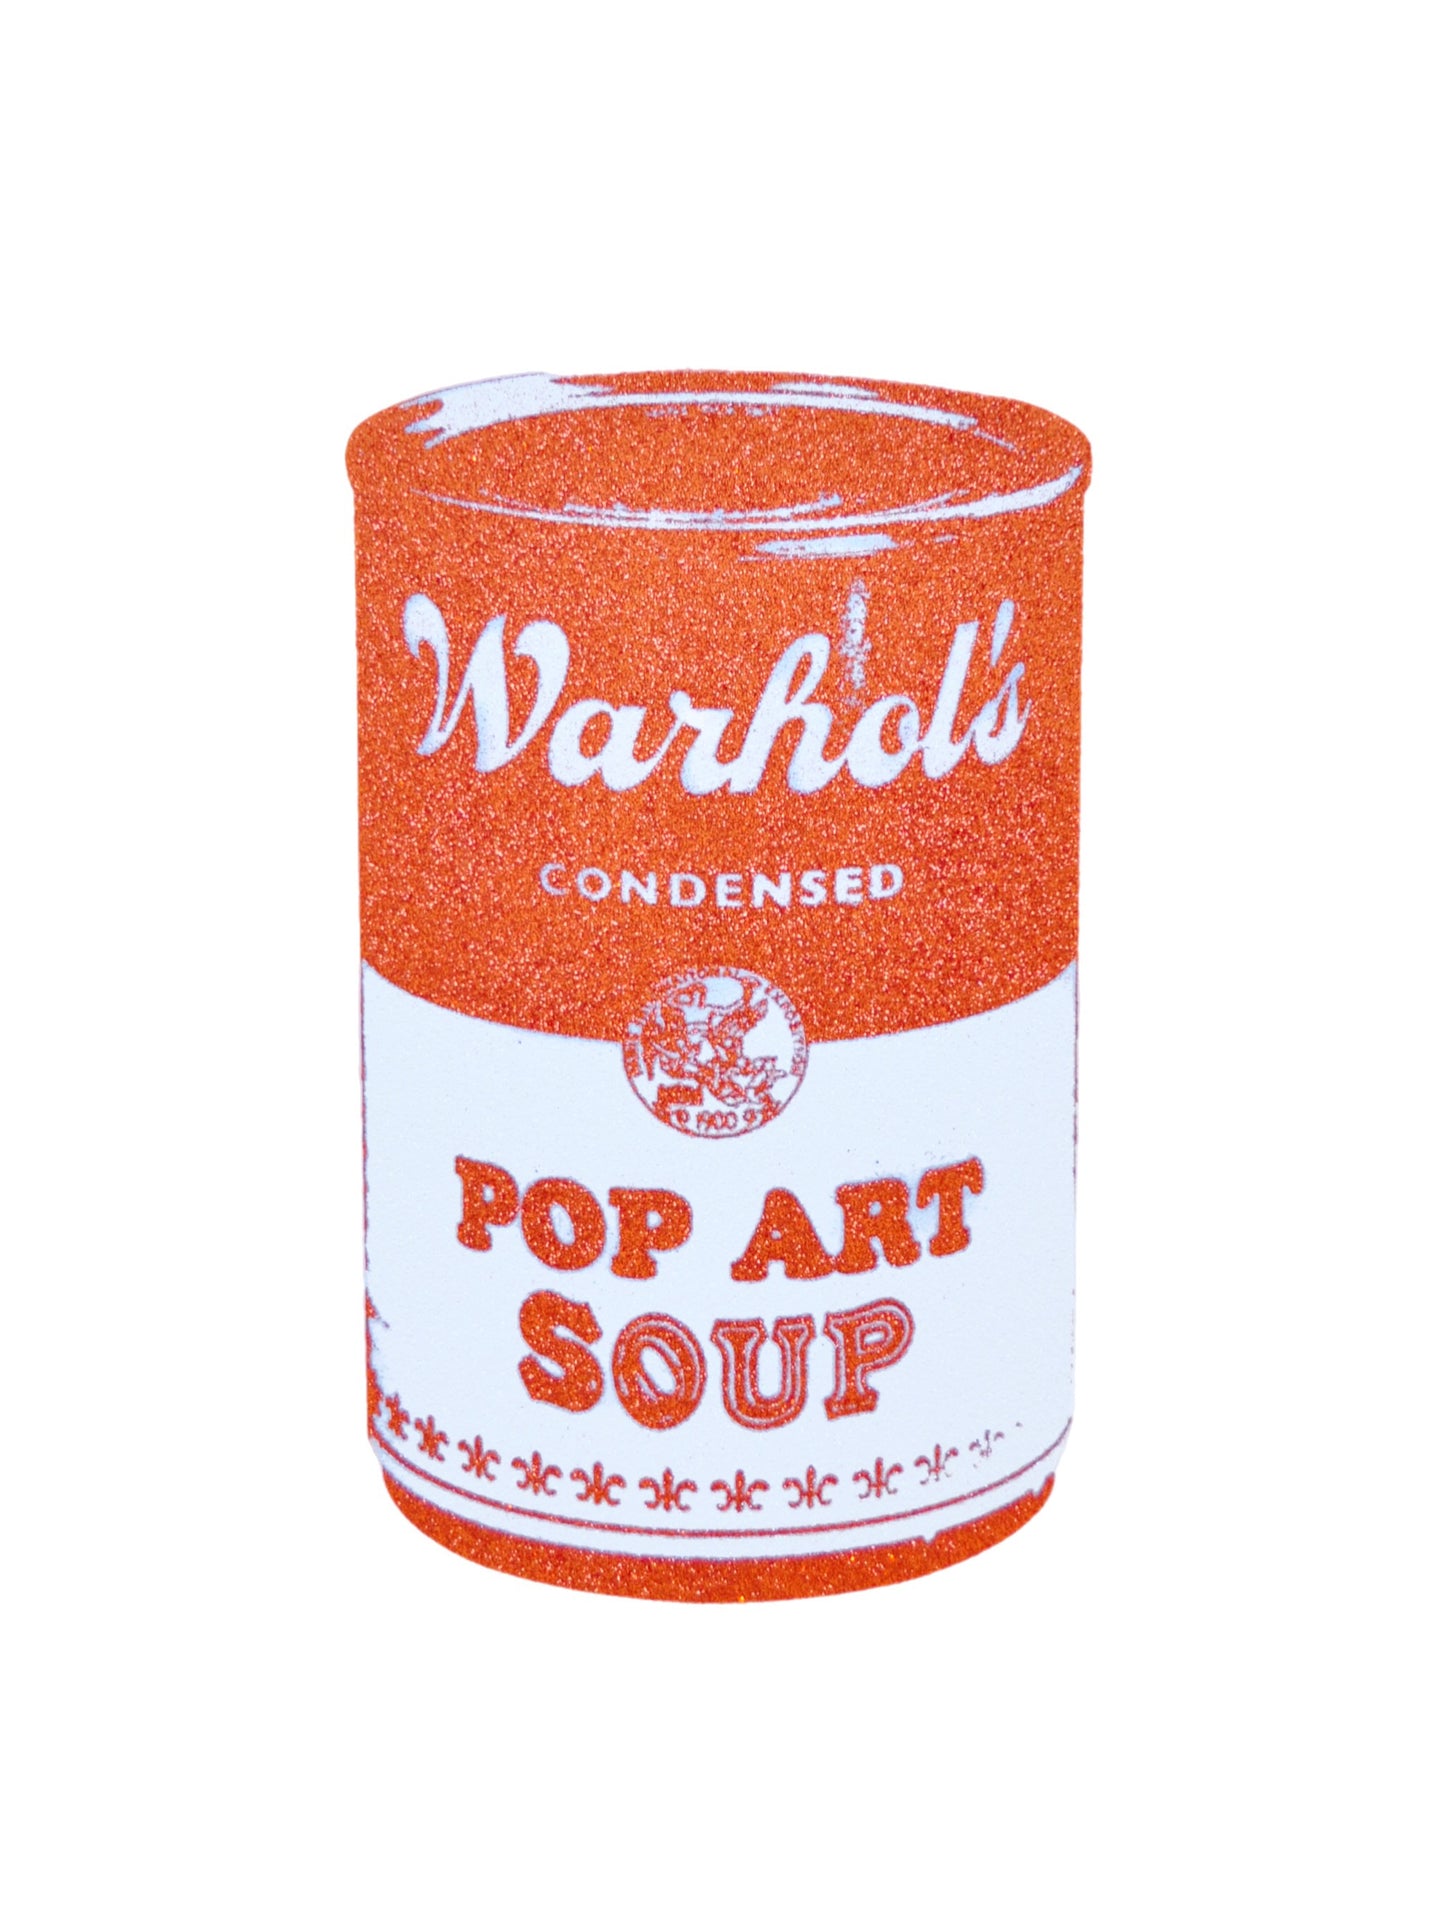 Pop Art Soup, 2013, Tangerine